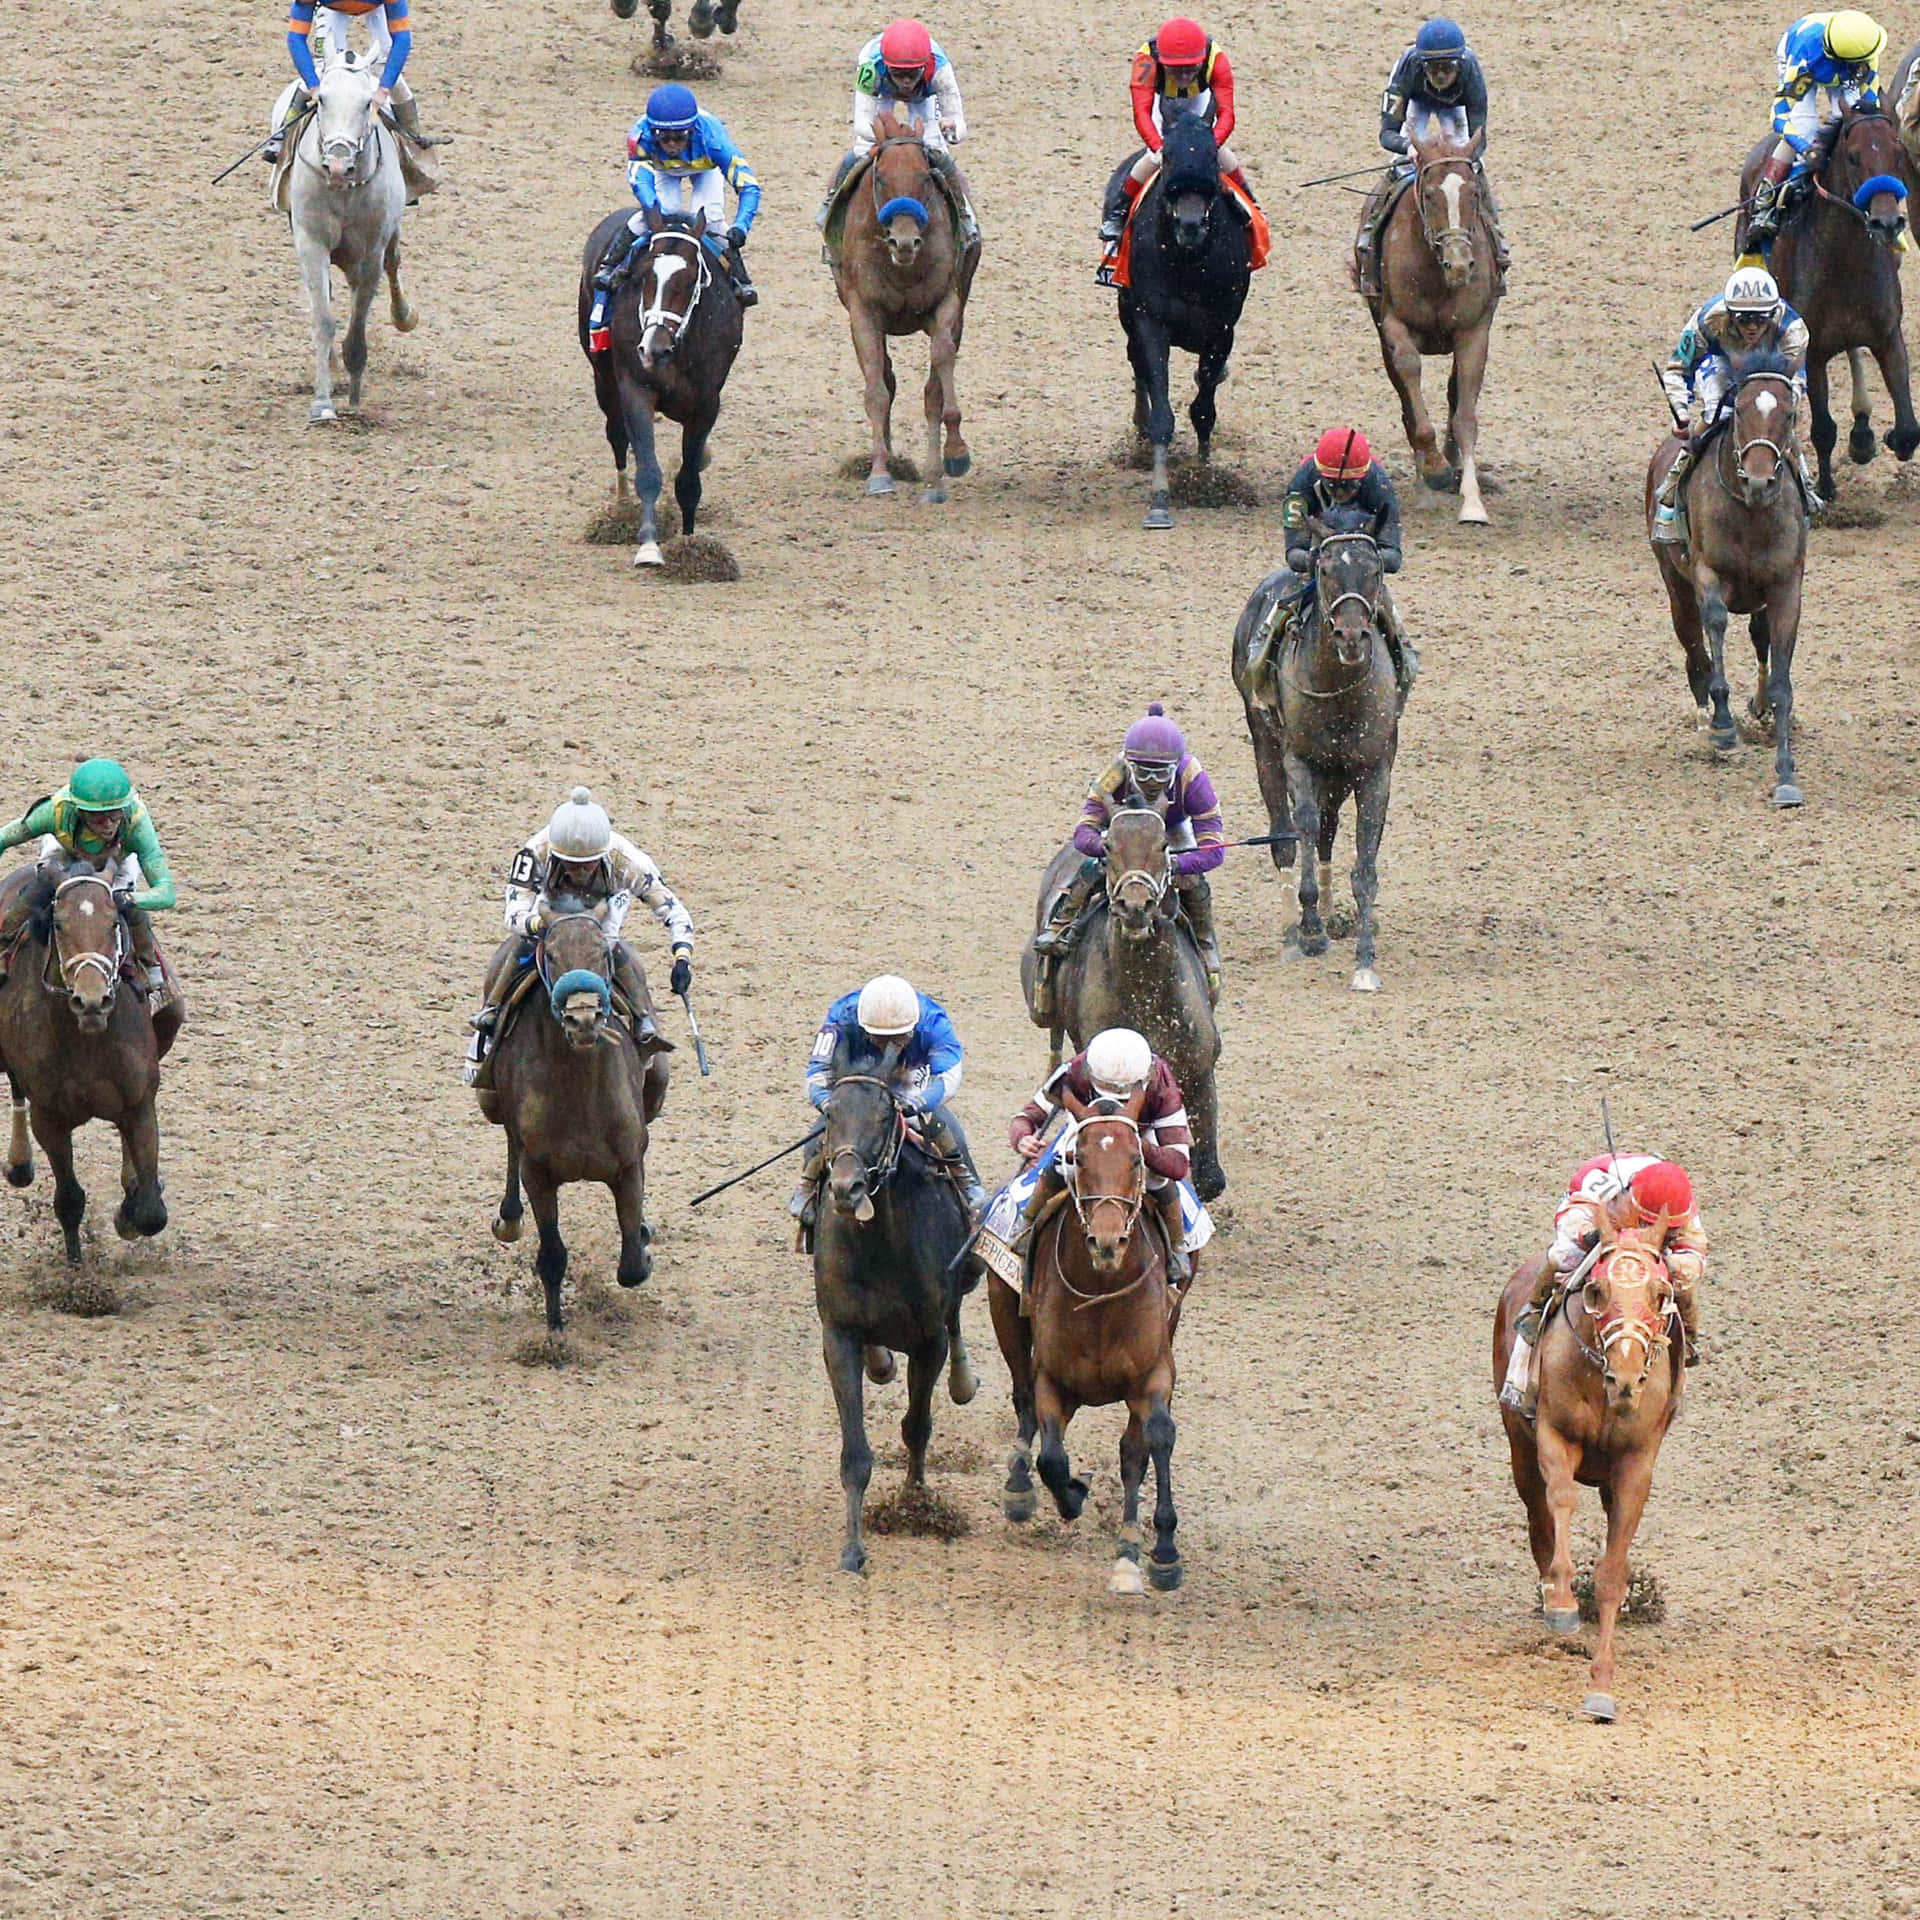 A Group Of Jockeys Riding Horses On A Dirty Track